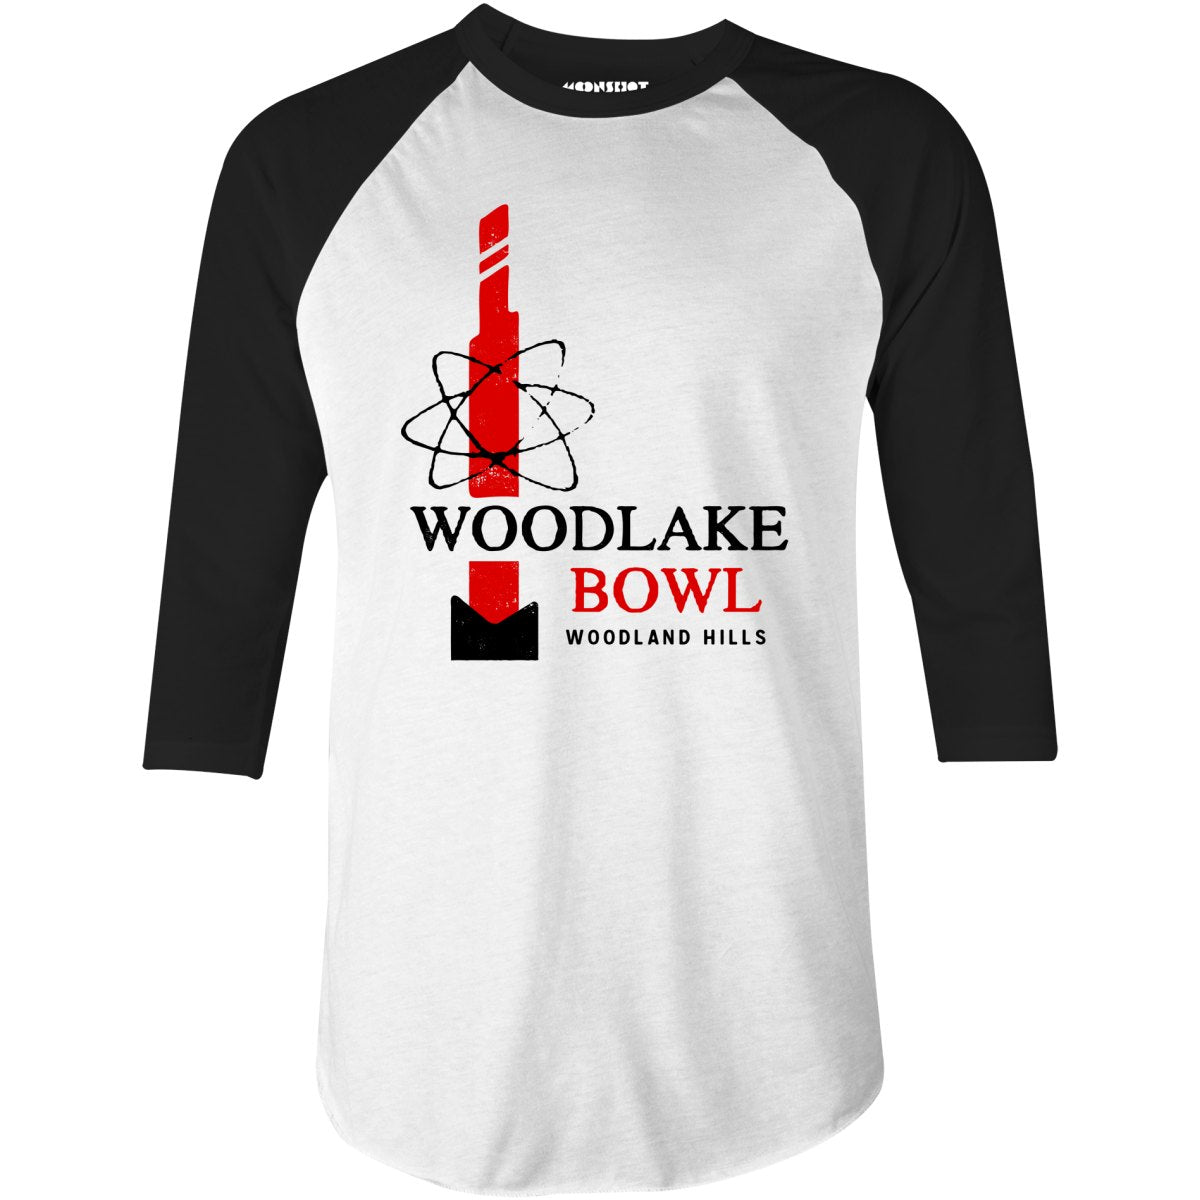 Woodlake Bowl - Woodland Hills, CA - Vintage Bowling Alley - 3/4 Sleeve Raglan T-Shirt